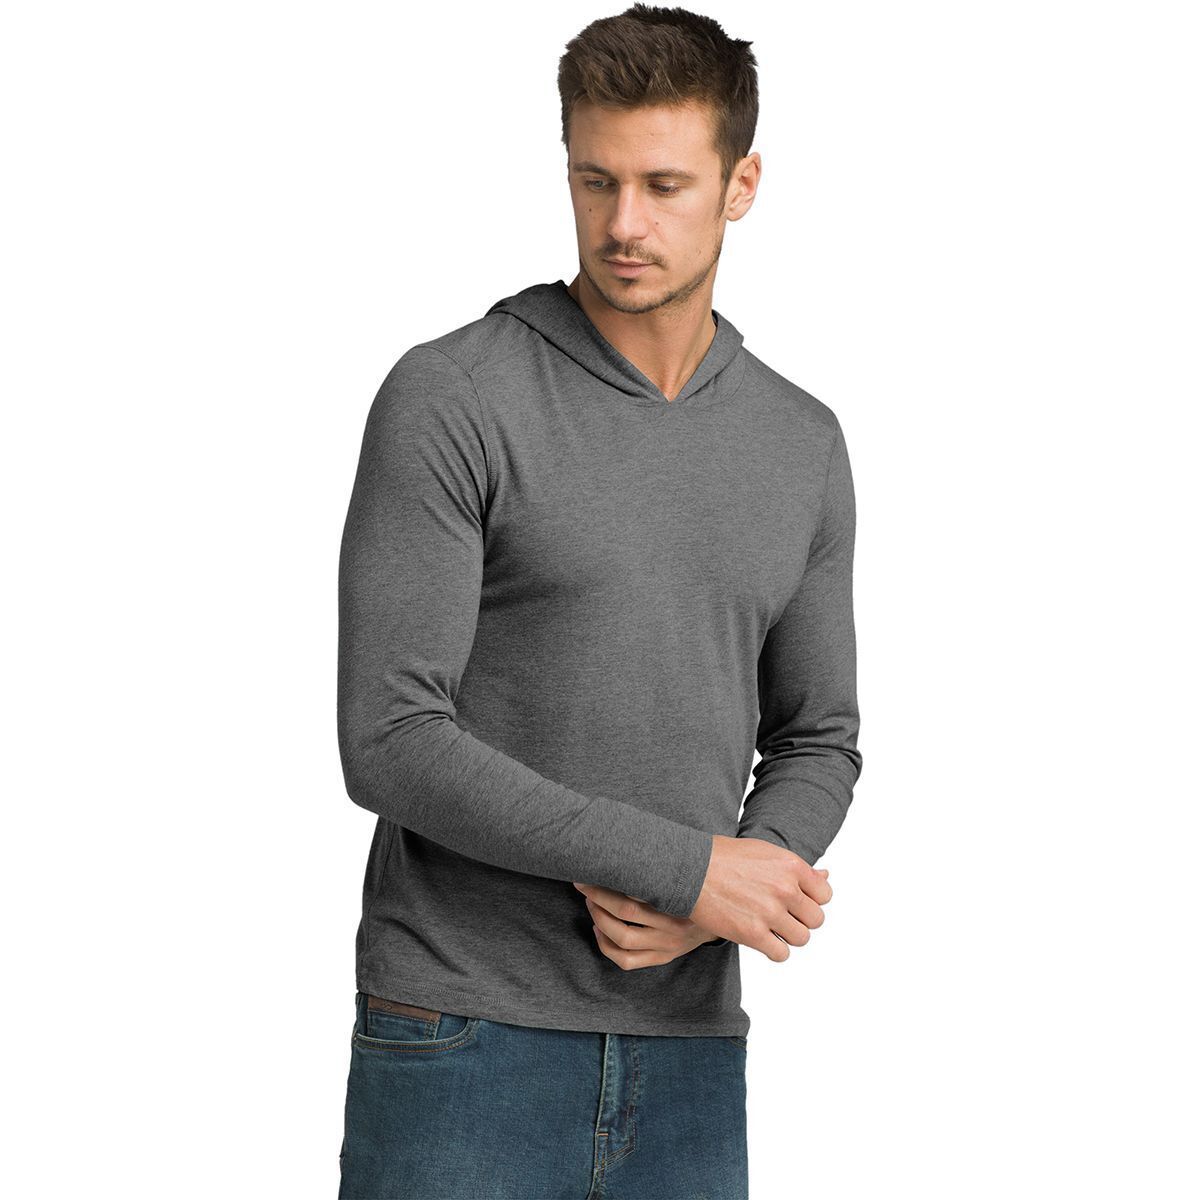 Mens F Hooded Sweatshirt Funny Printed Pullover Hoodies Classic Long Sleeve T Shirt Tops 